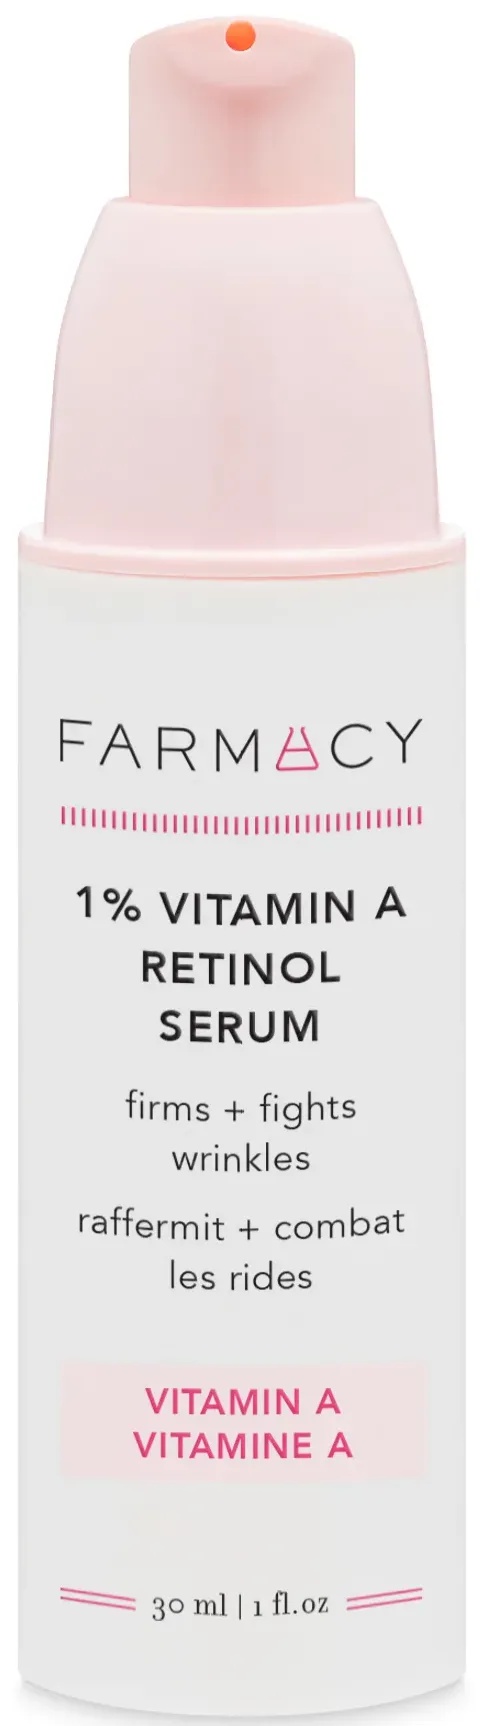 Farmacy 1% Vitamin A Retinol Serum